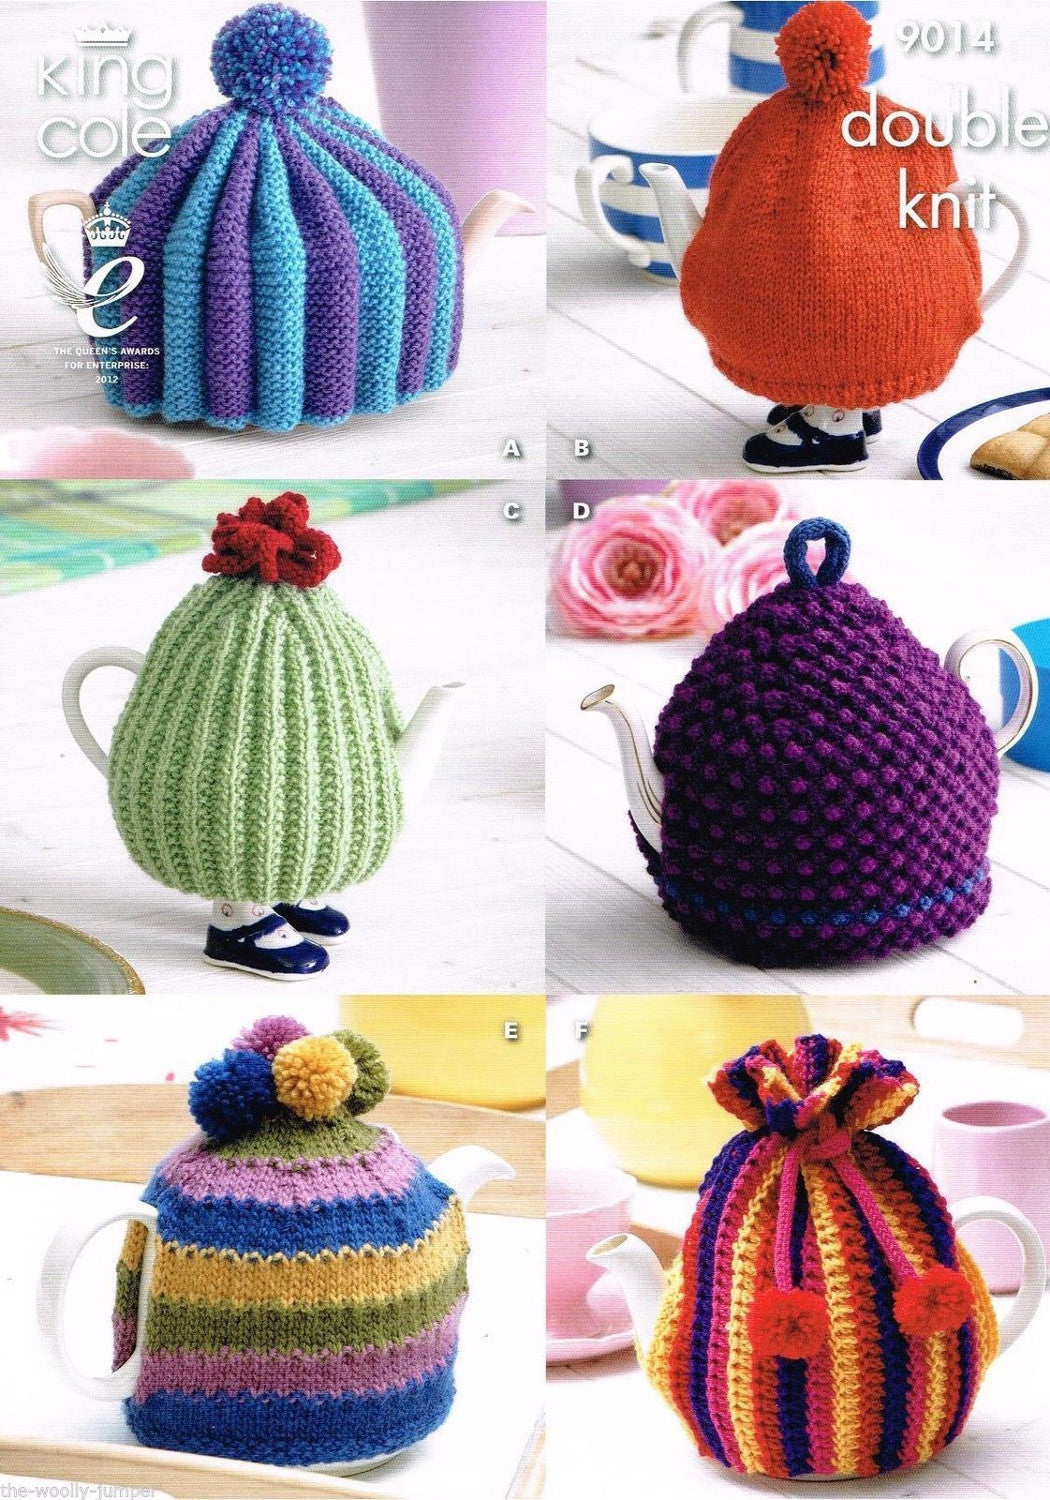 King Cole DK Knitting Pattern - Tea Cosies 9014